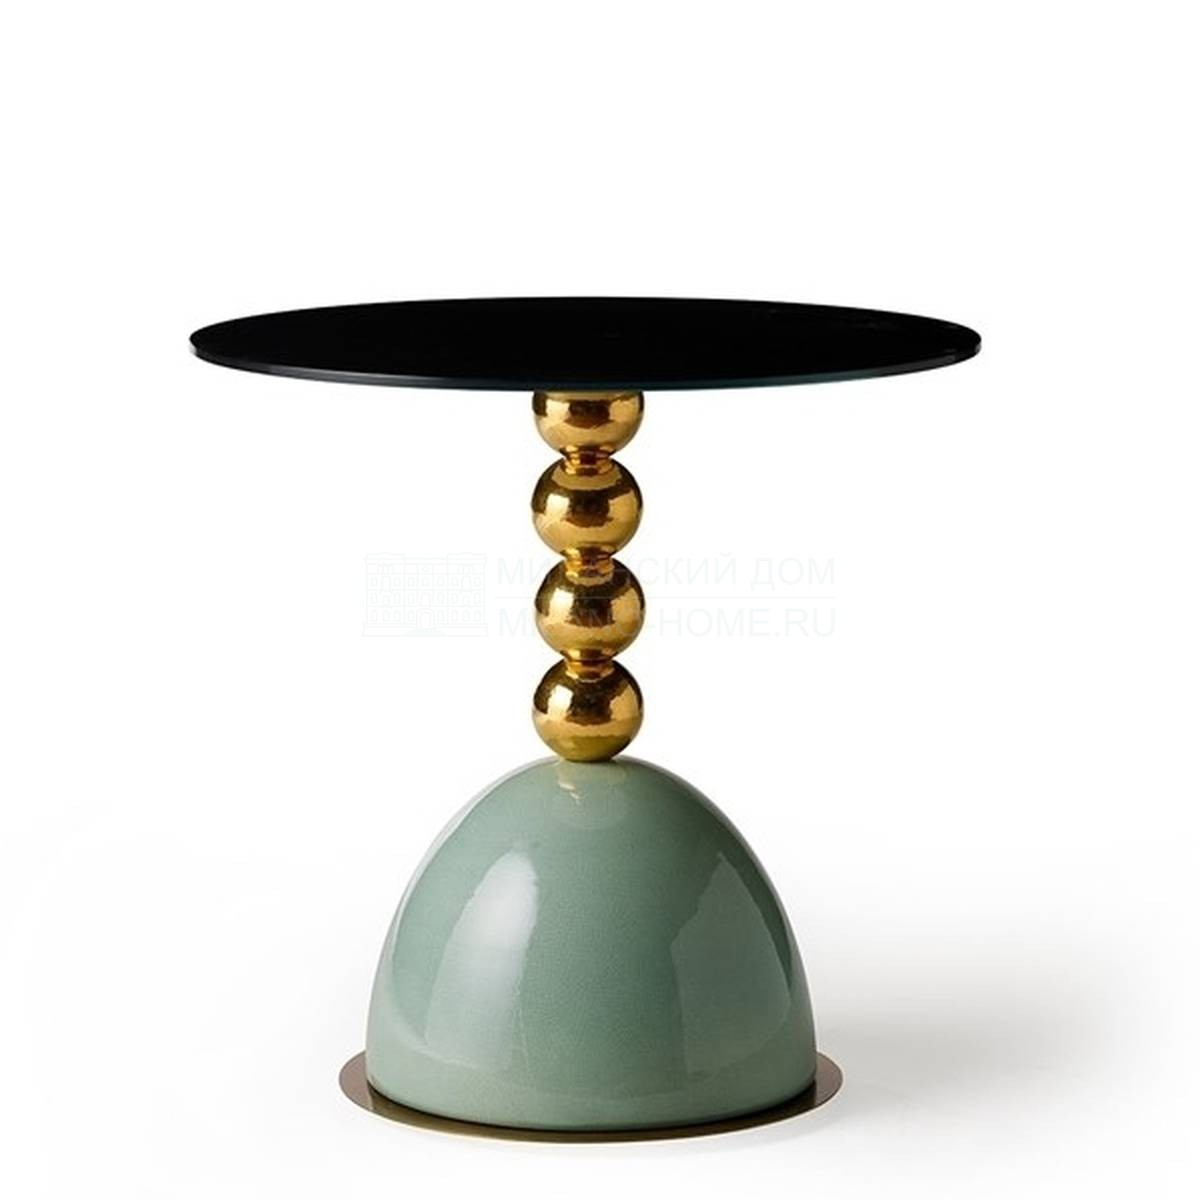 Кофейный столик Pins coffee table with spheres  из Италии фабрики MARIONI